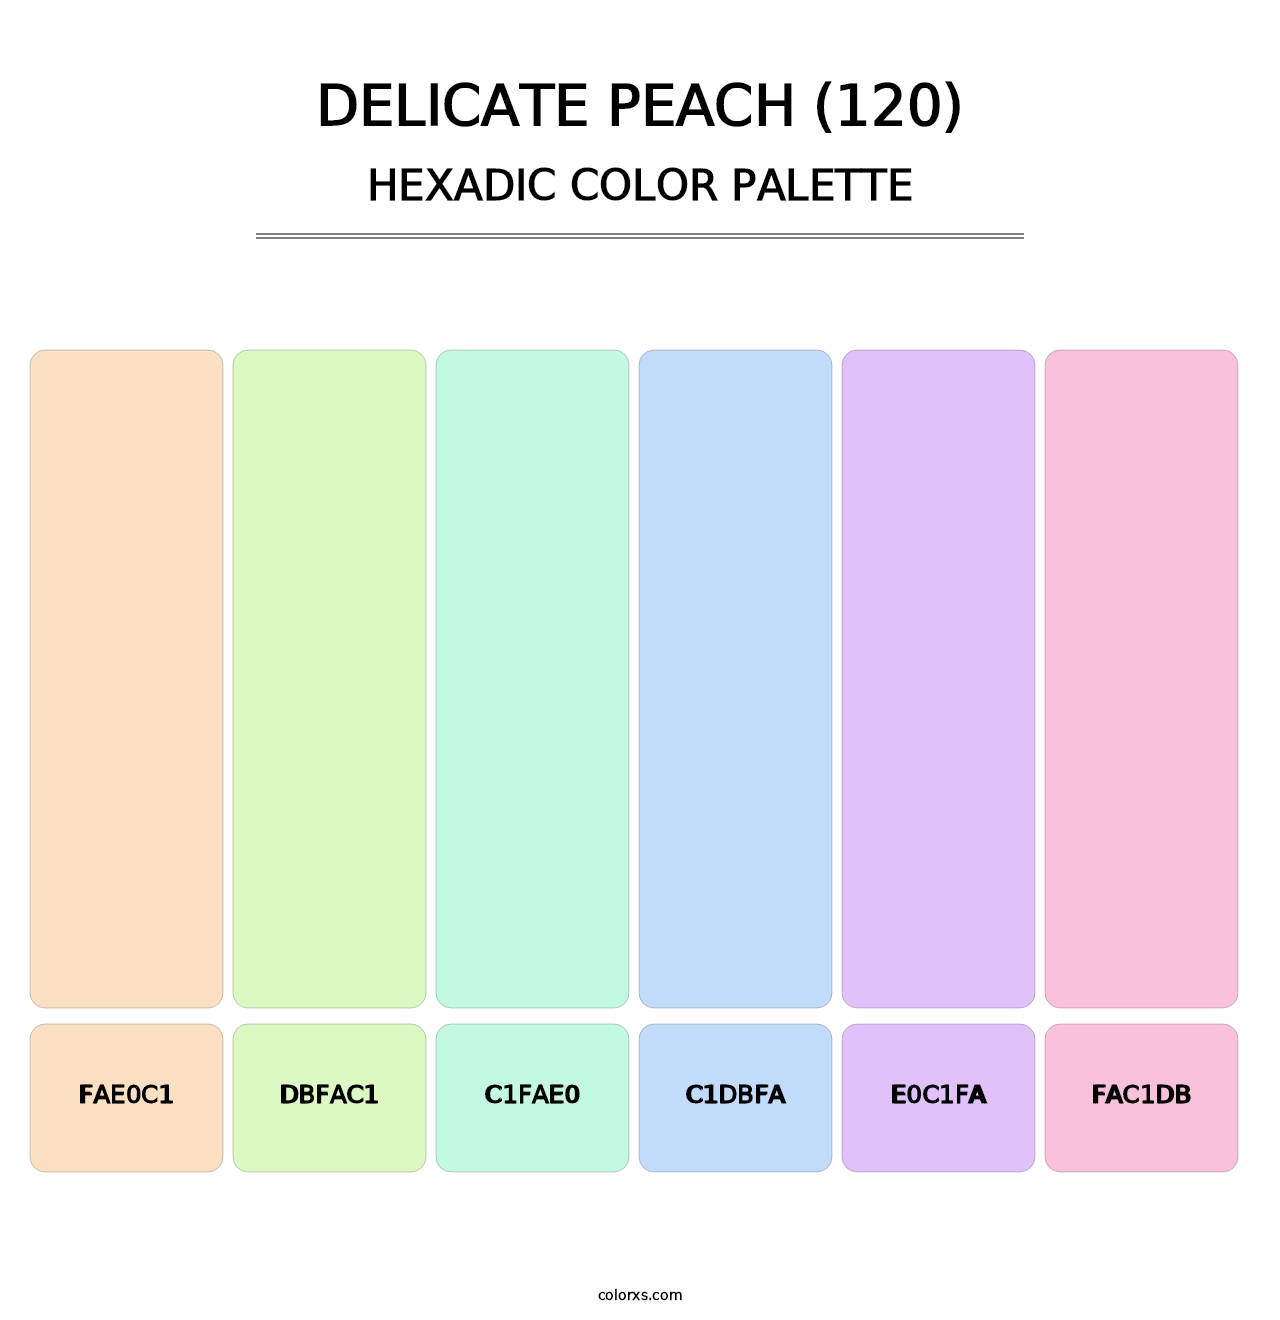 Delicate Peach (120) - Hexadic Color Palette